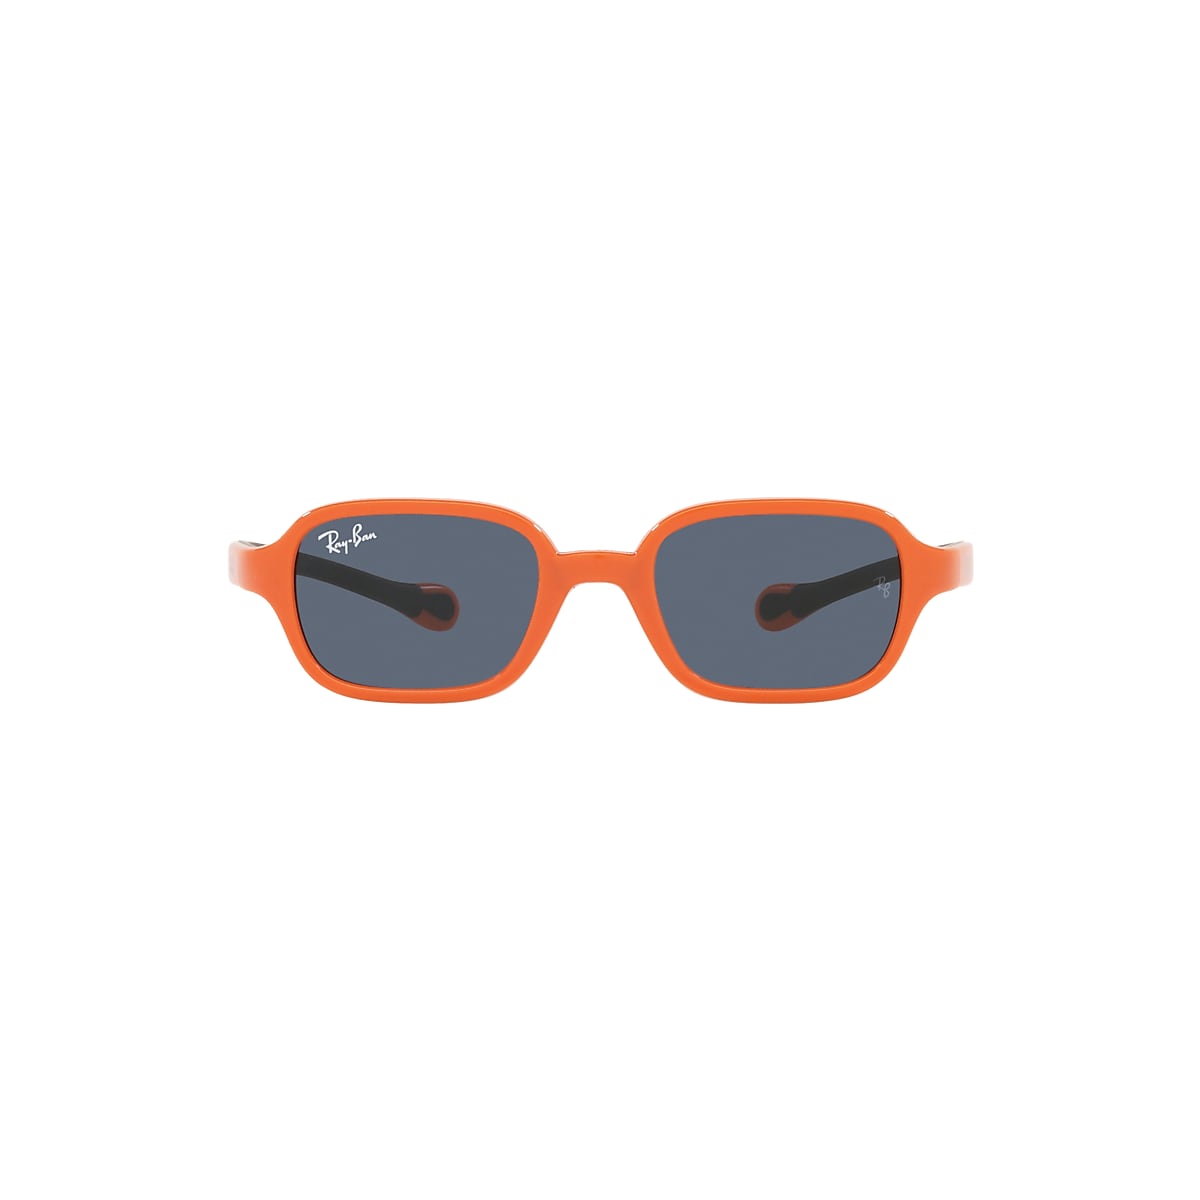 RB9074S KIDS Sunglasses in Orange On Black and Grey 